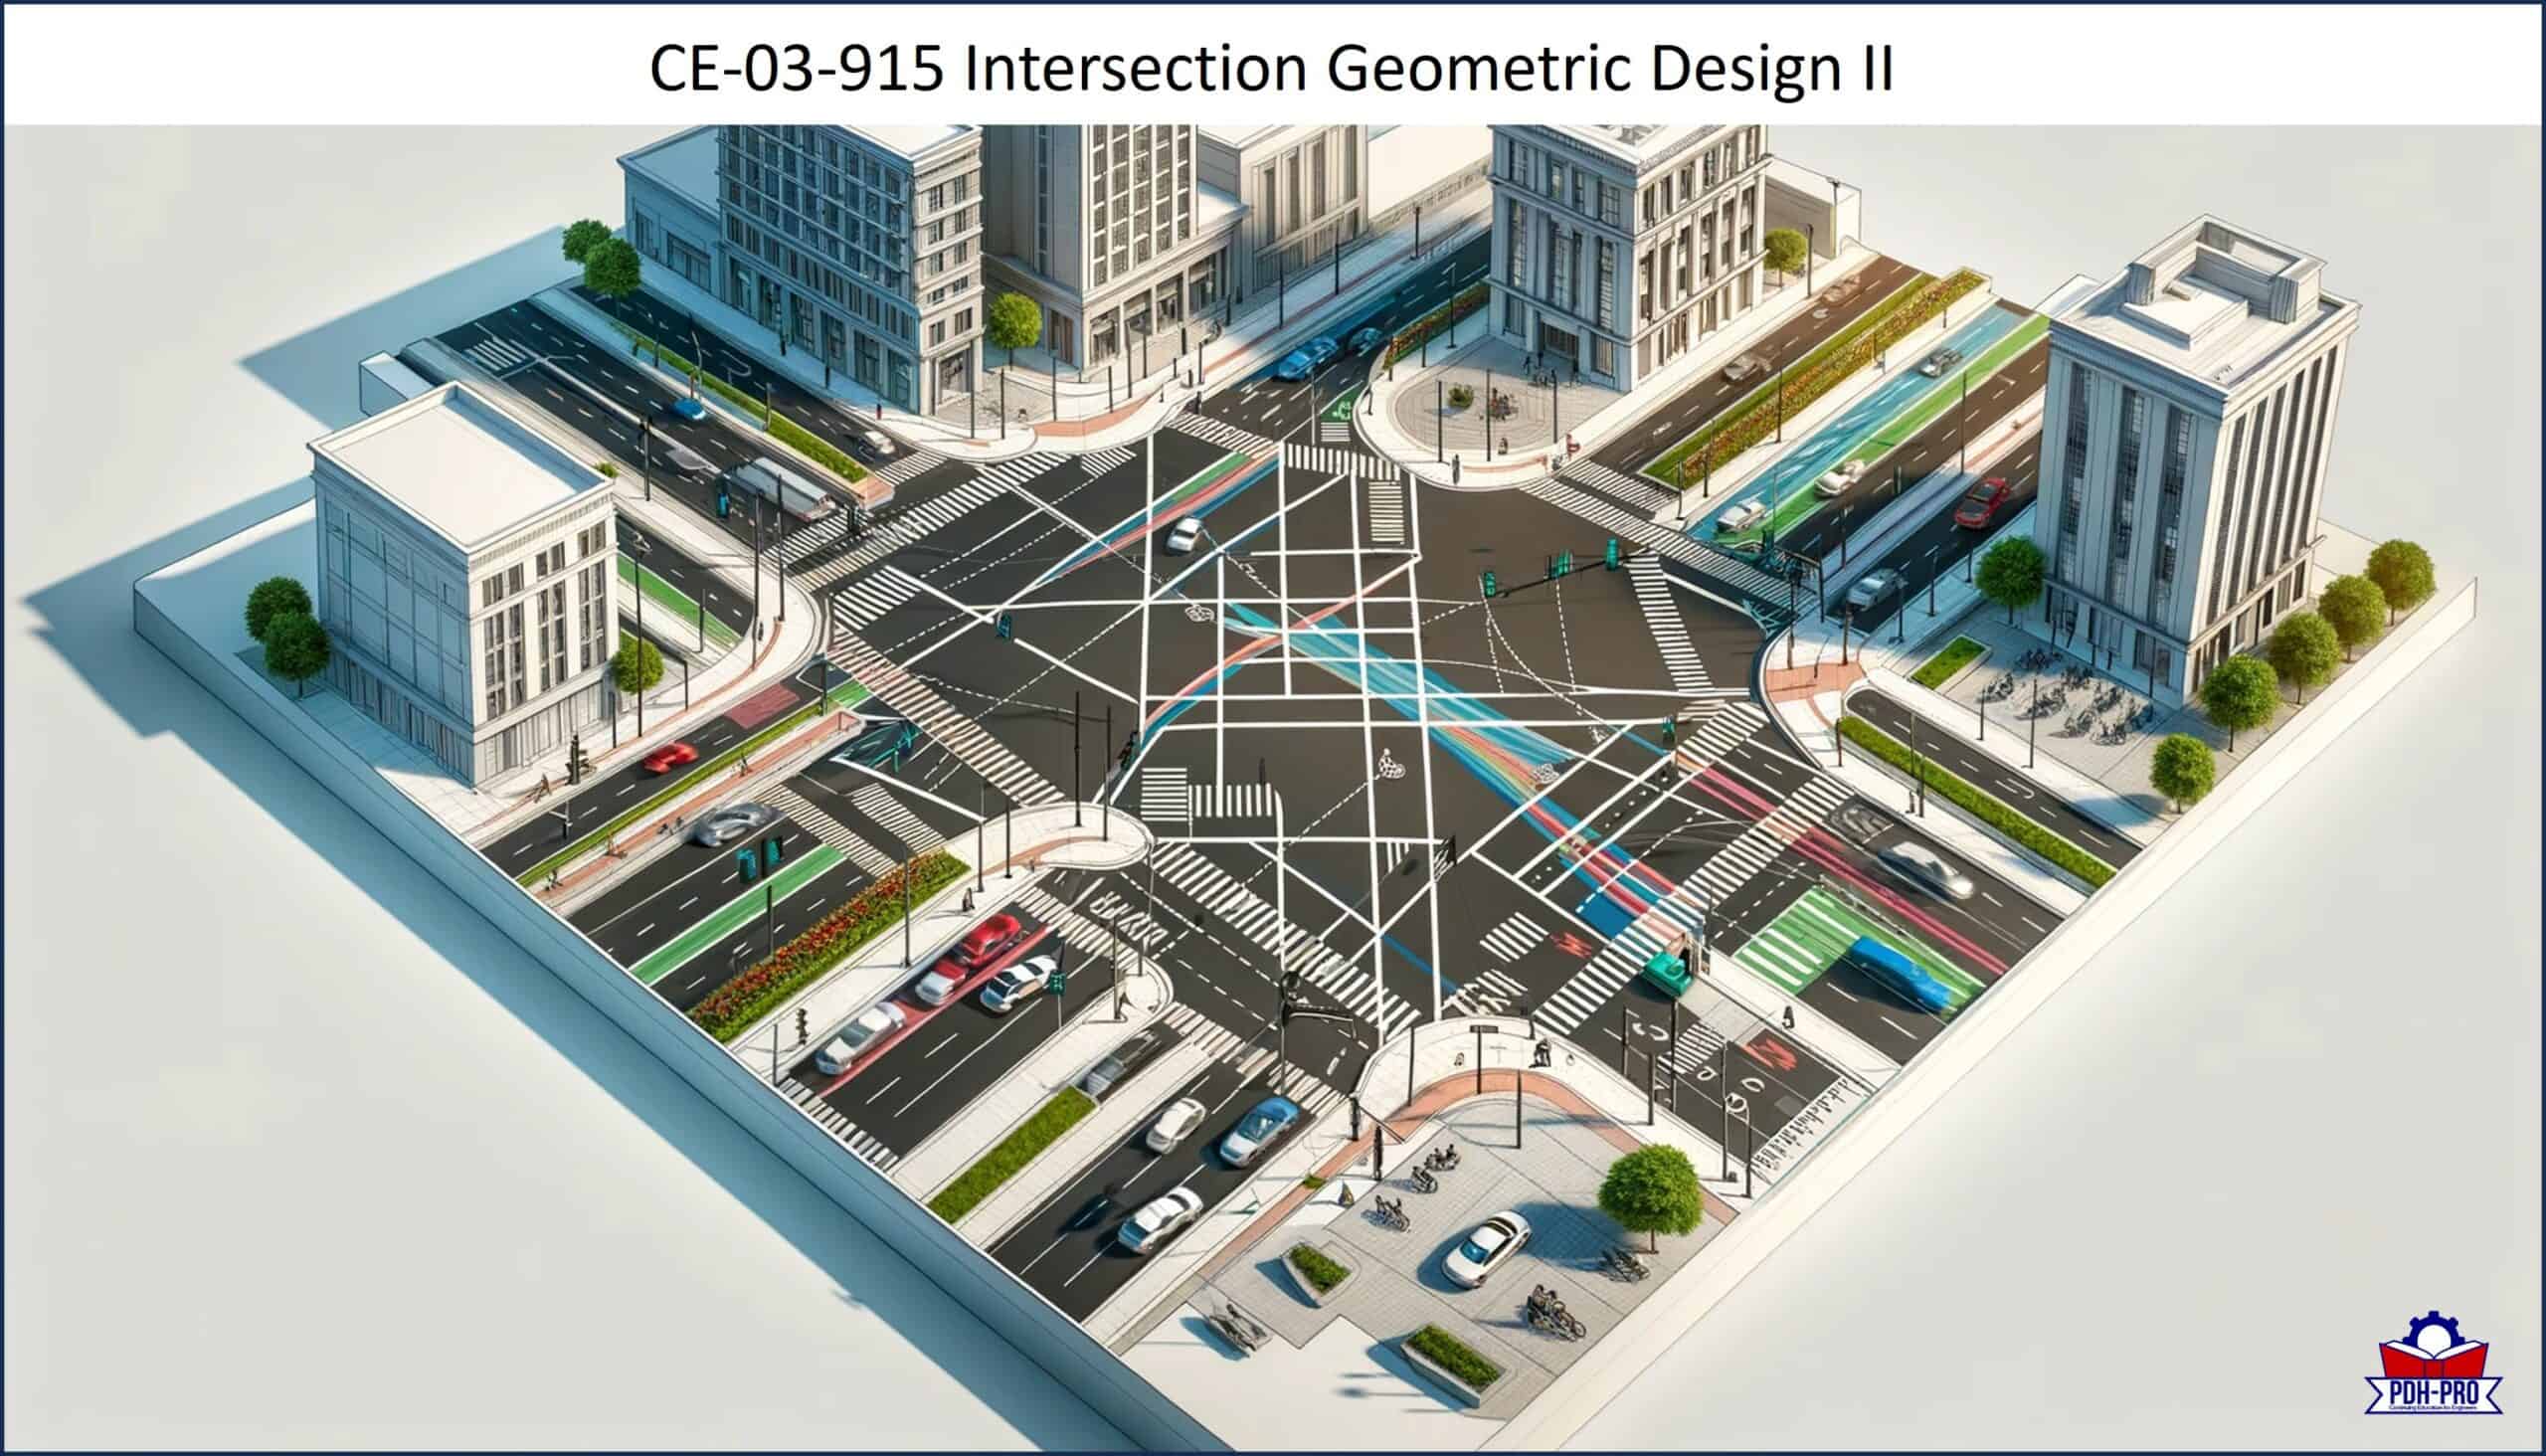 Intersection Geometric Design II